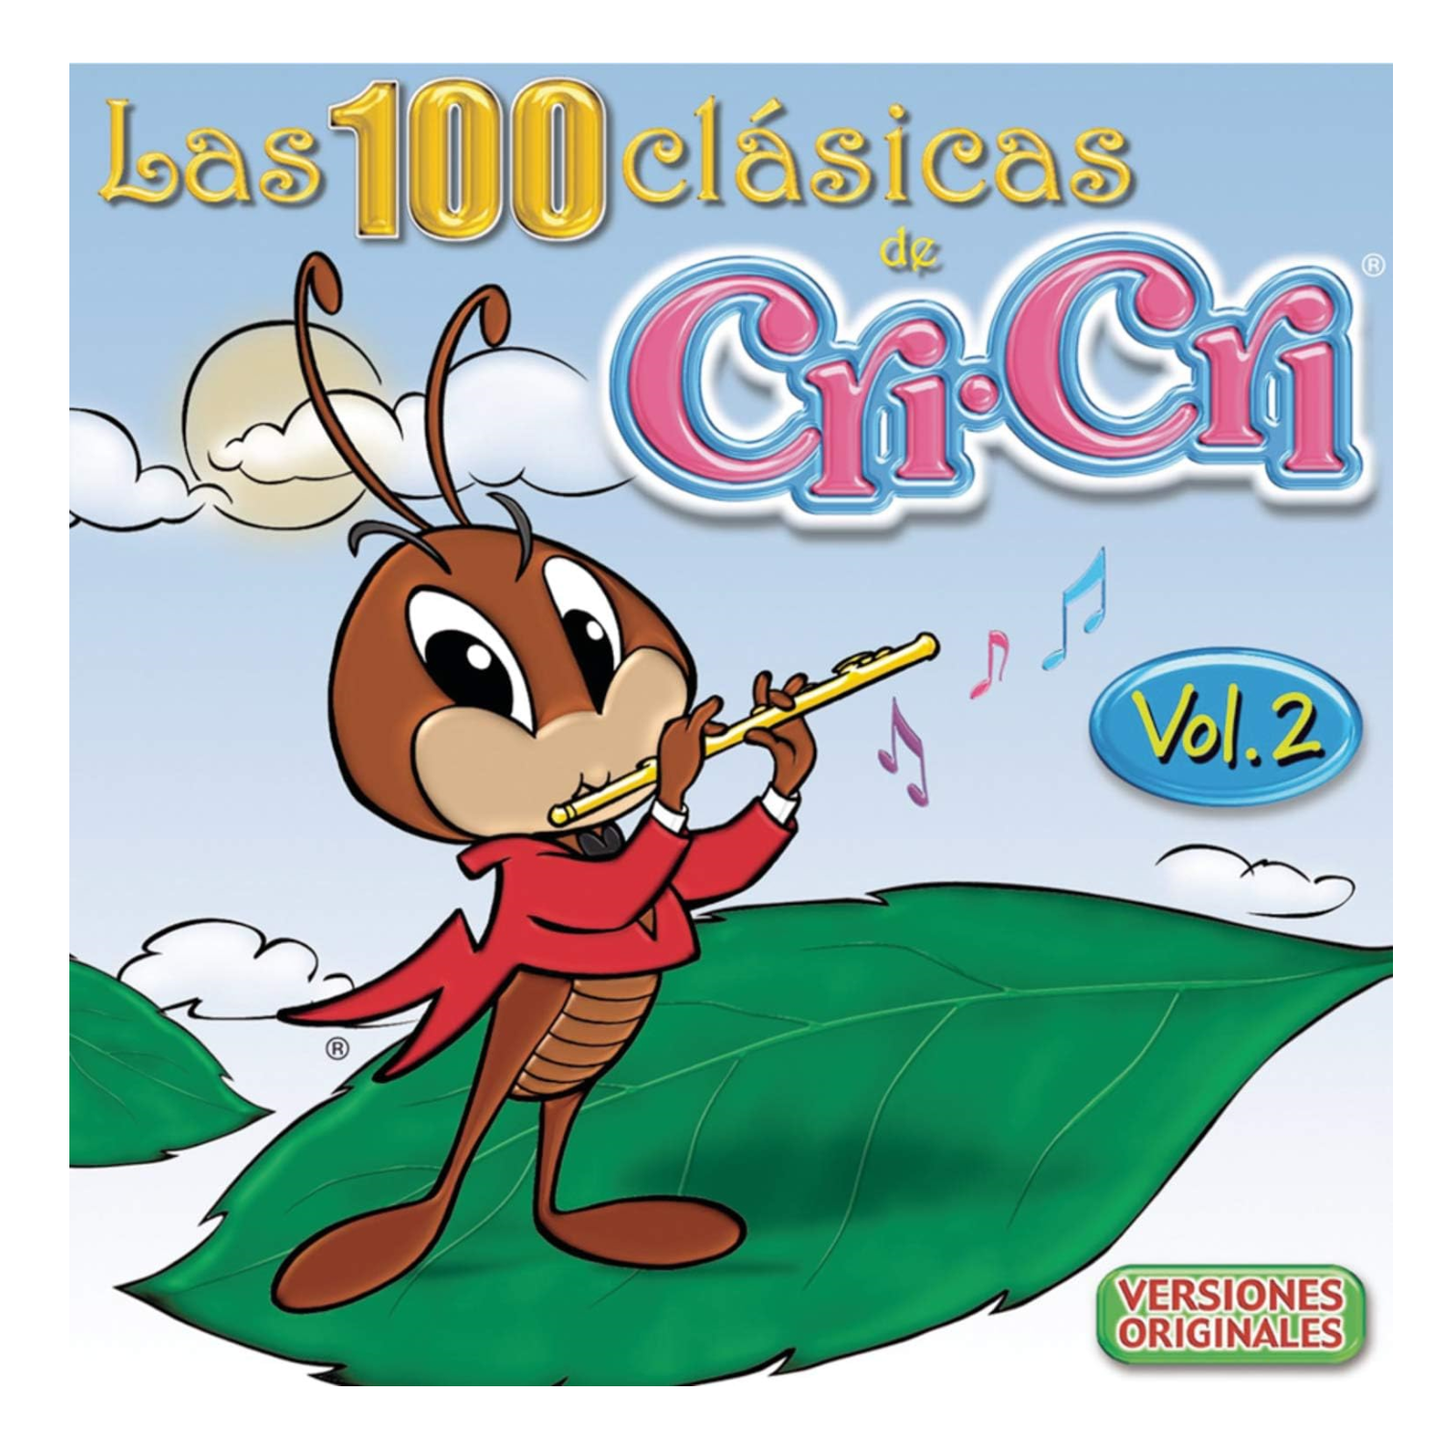 Cri-Cri Las 100 Clasicas Vol. 2 / 2 Discos Cd